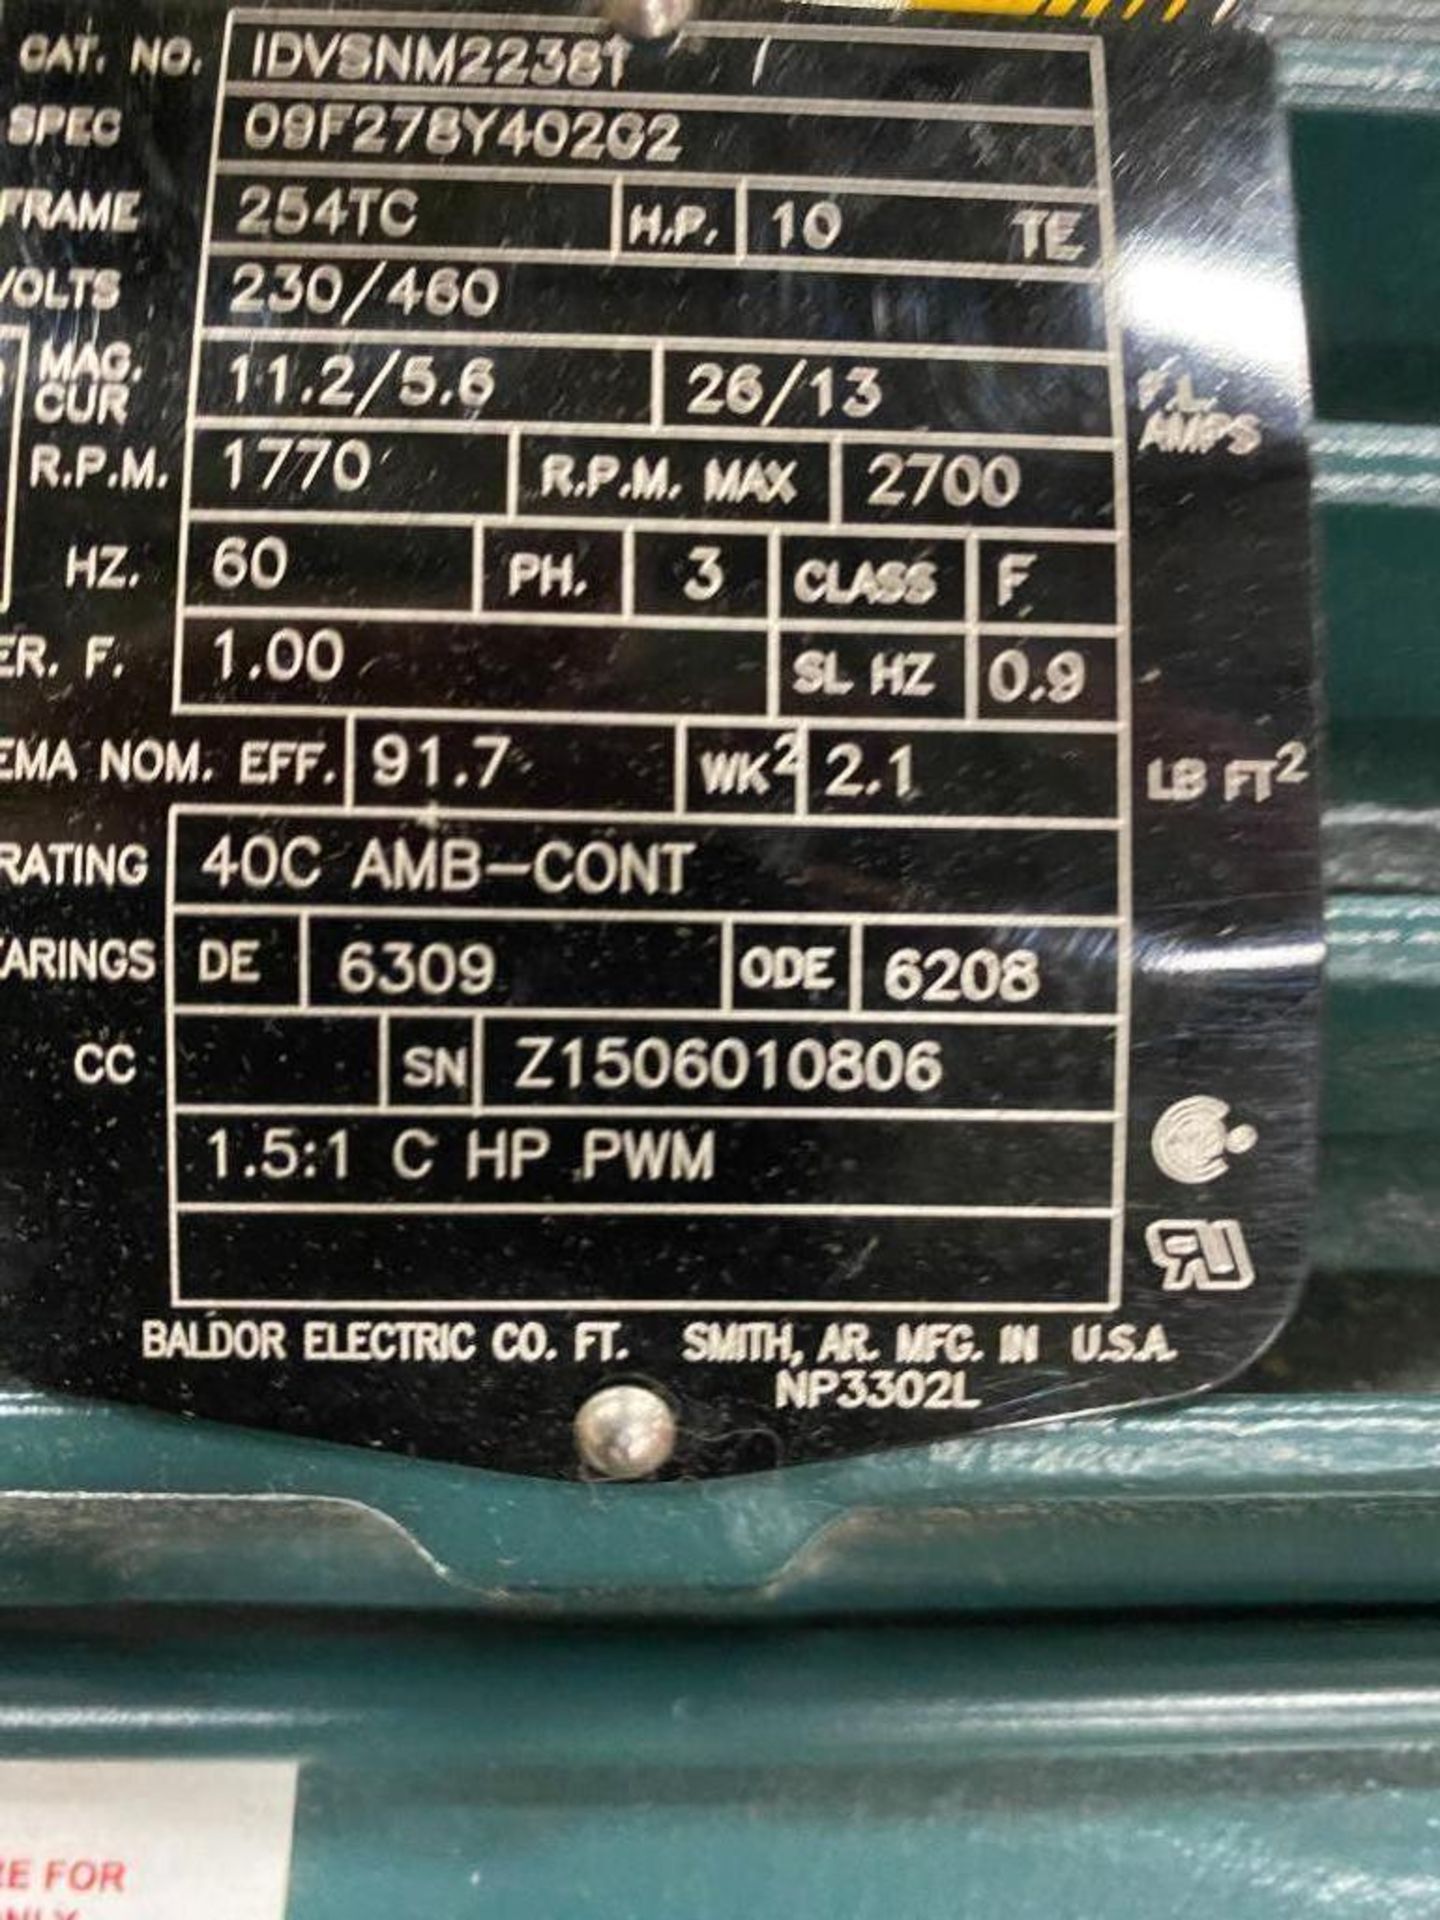 Baldor 10 HP Electric Motor, 230/460 V, 1770 RPM, 254TC Frame, 60 Hz - Image 2 of 2